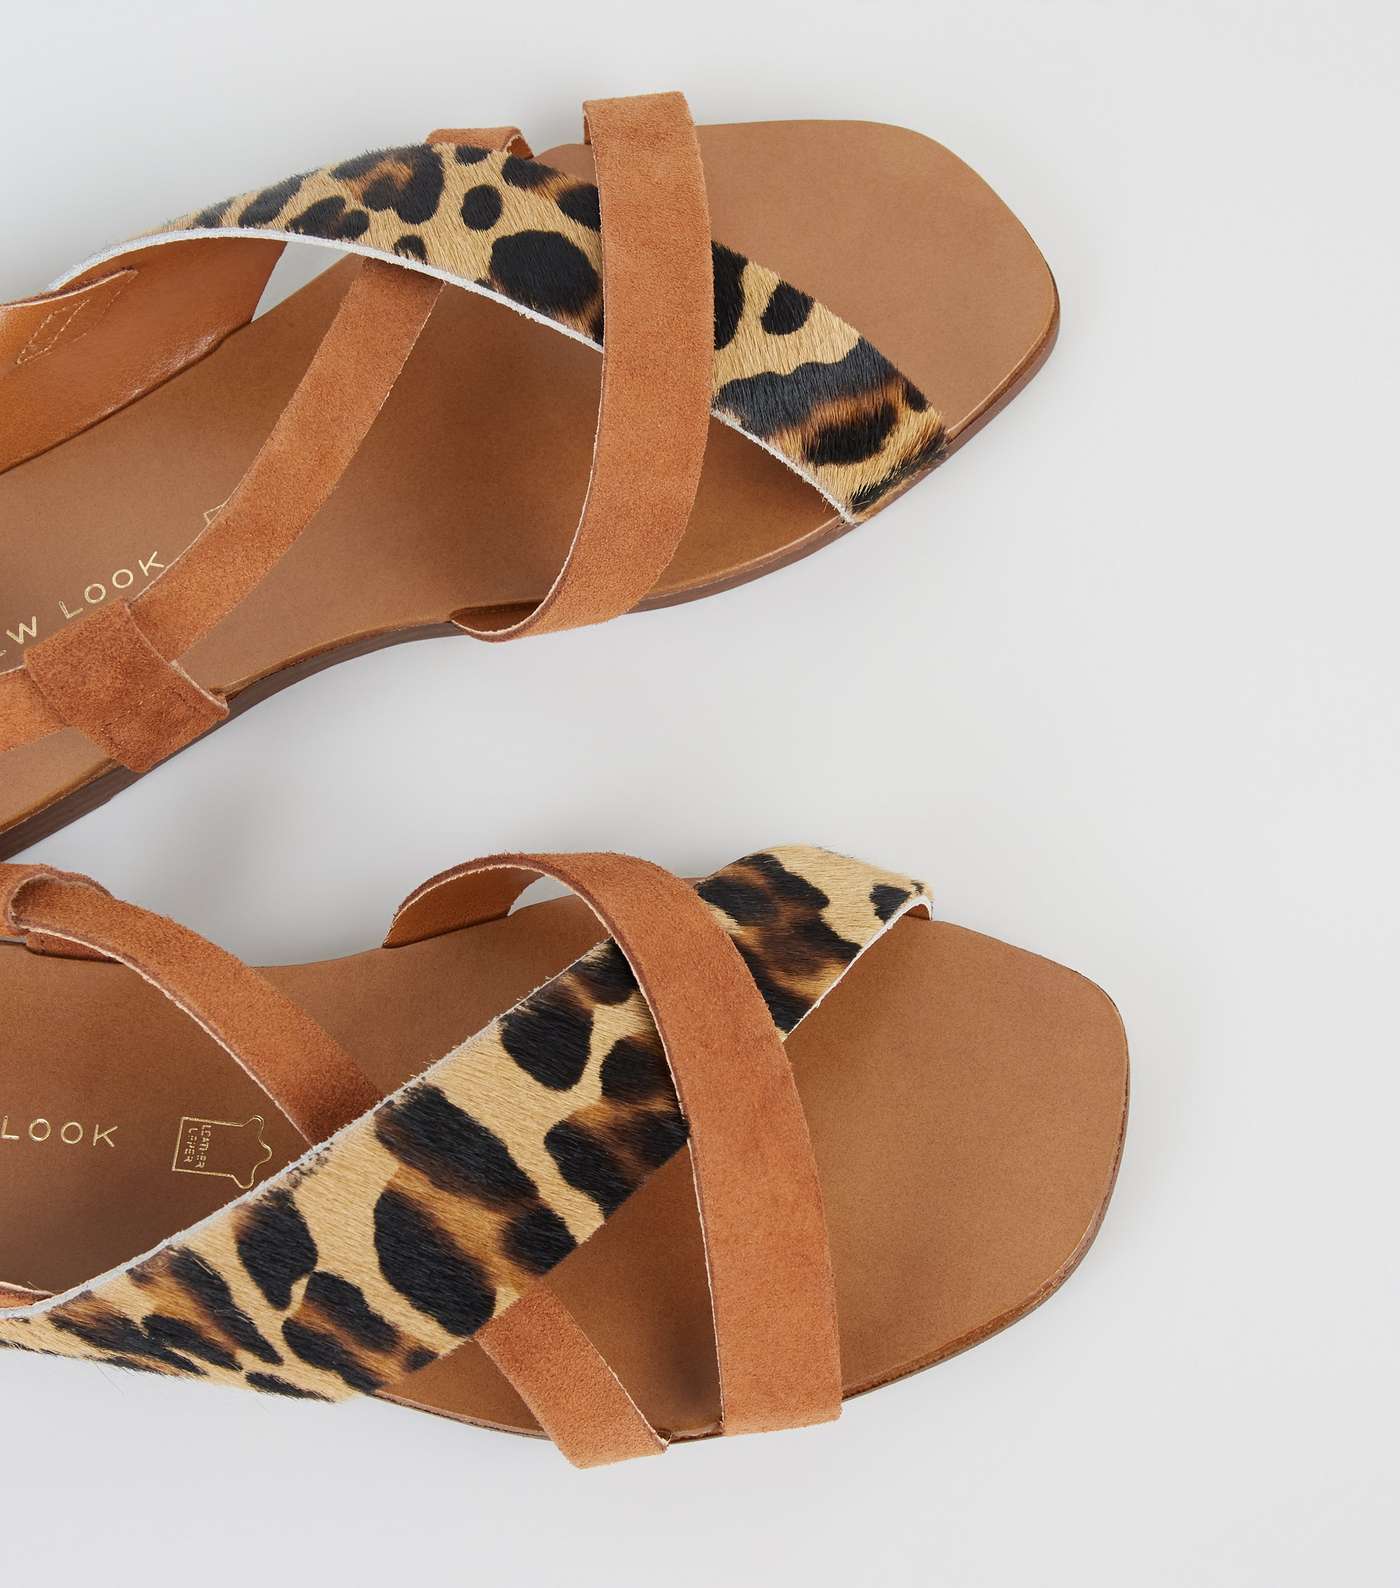 Wide Fit Tan Leather Leopard Print Strap Sandals Image 4